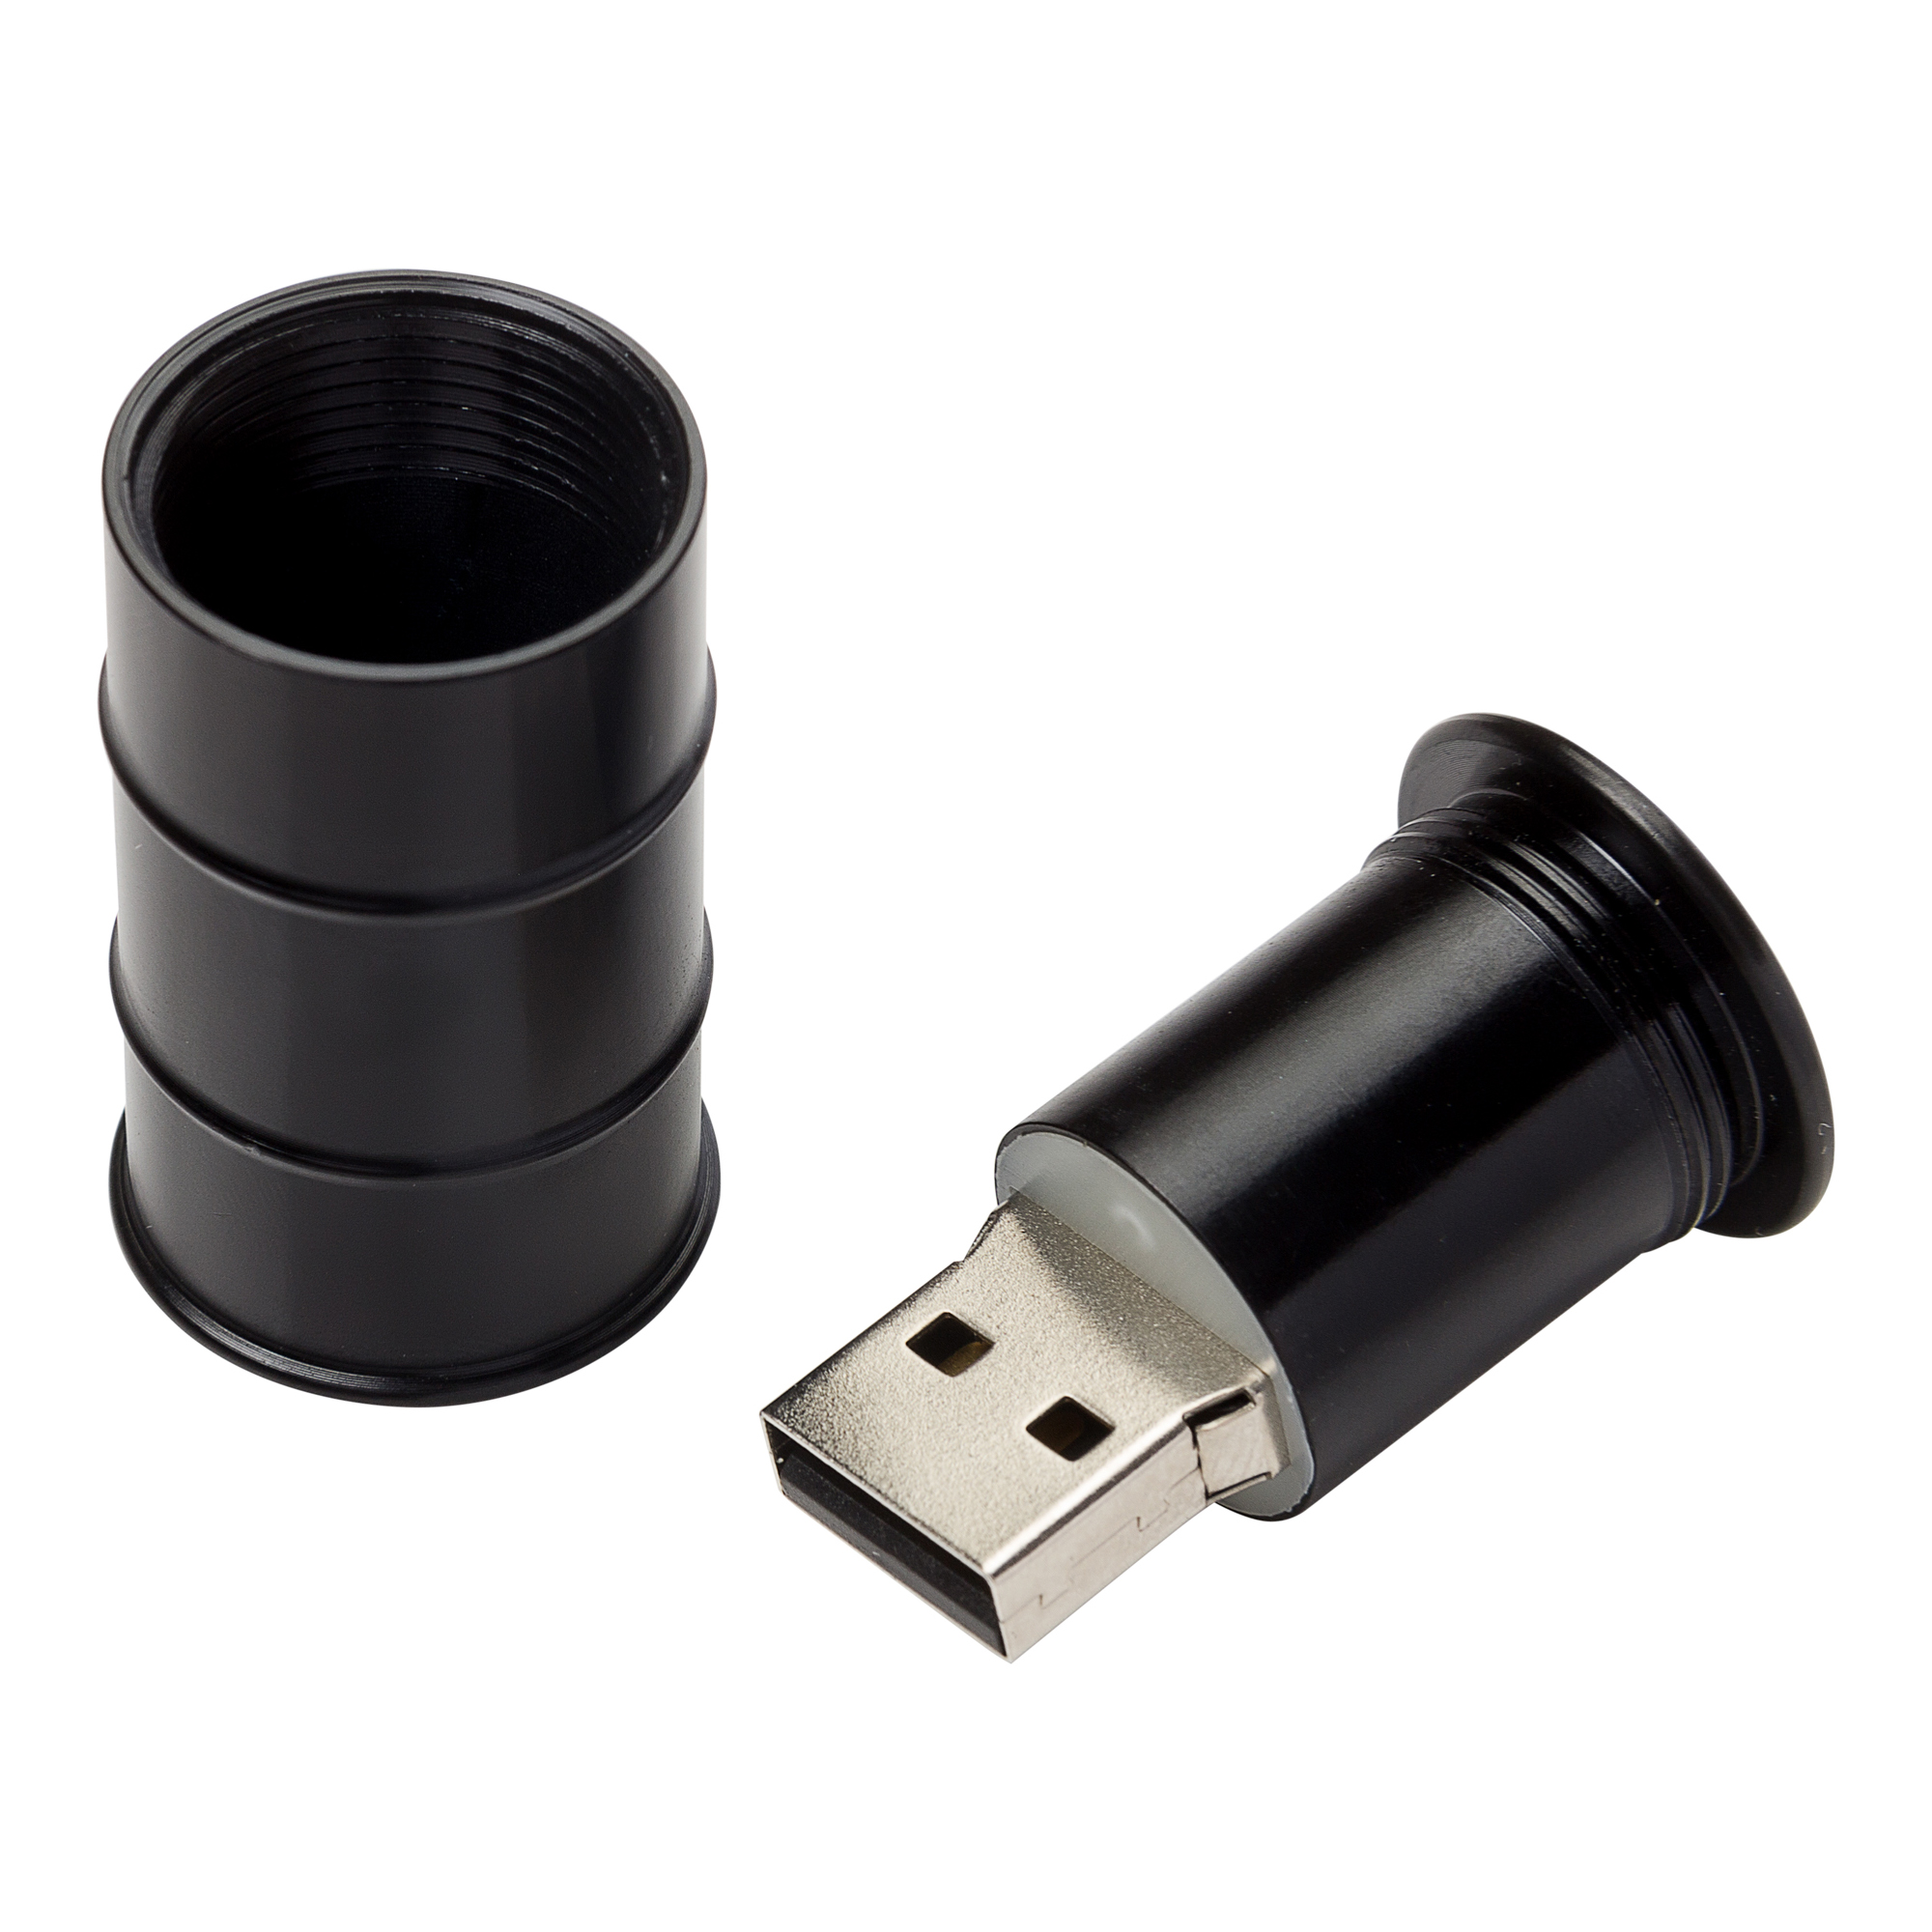 USB флешка модель 322